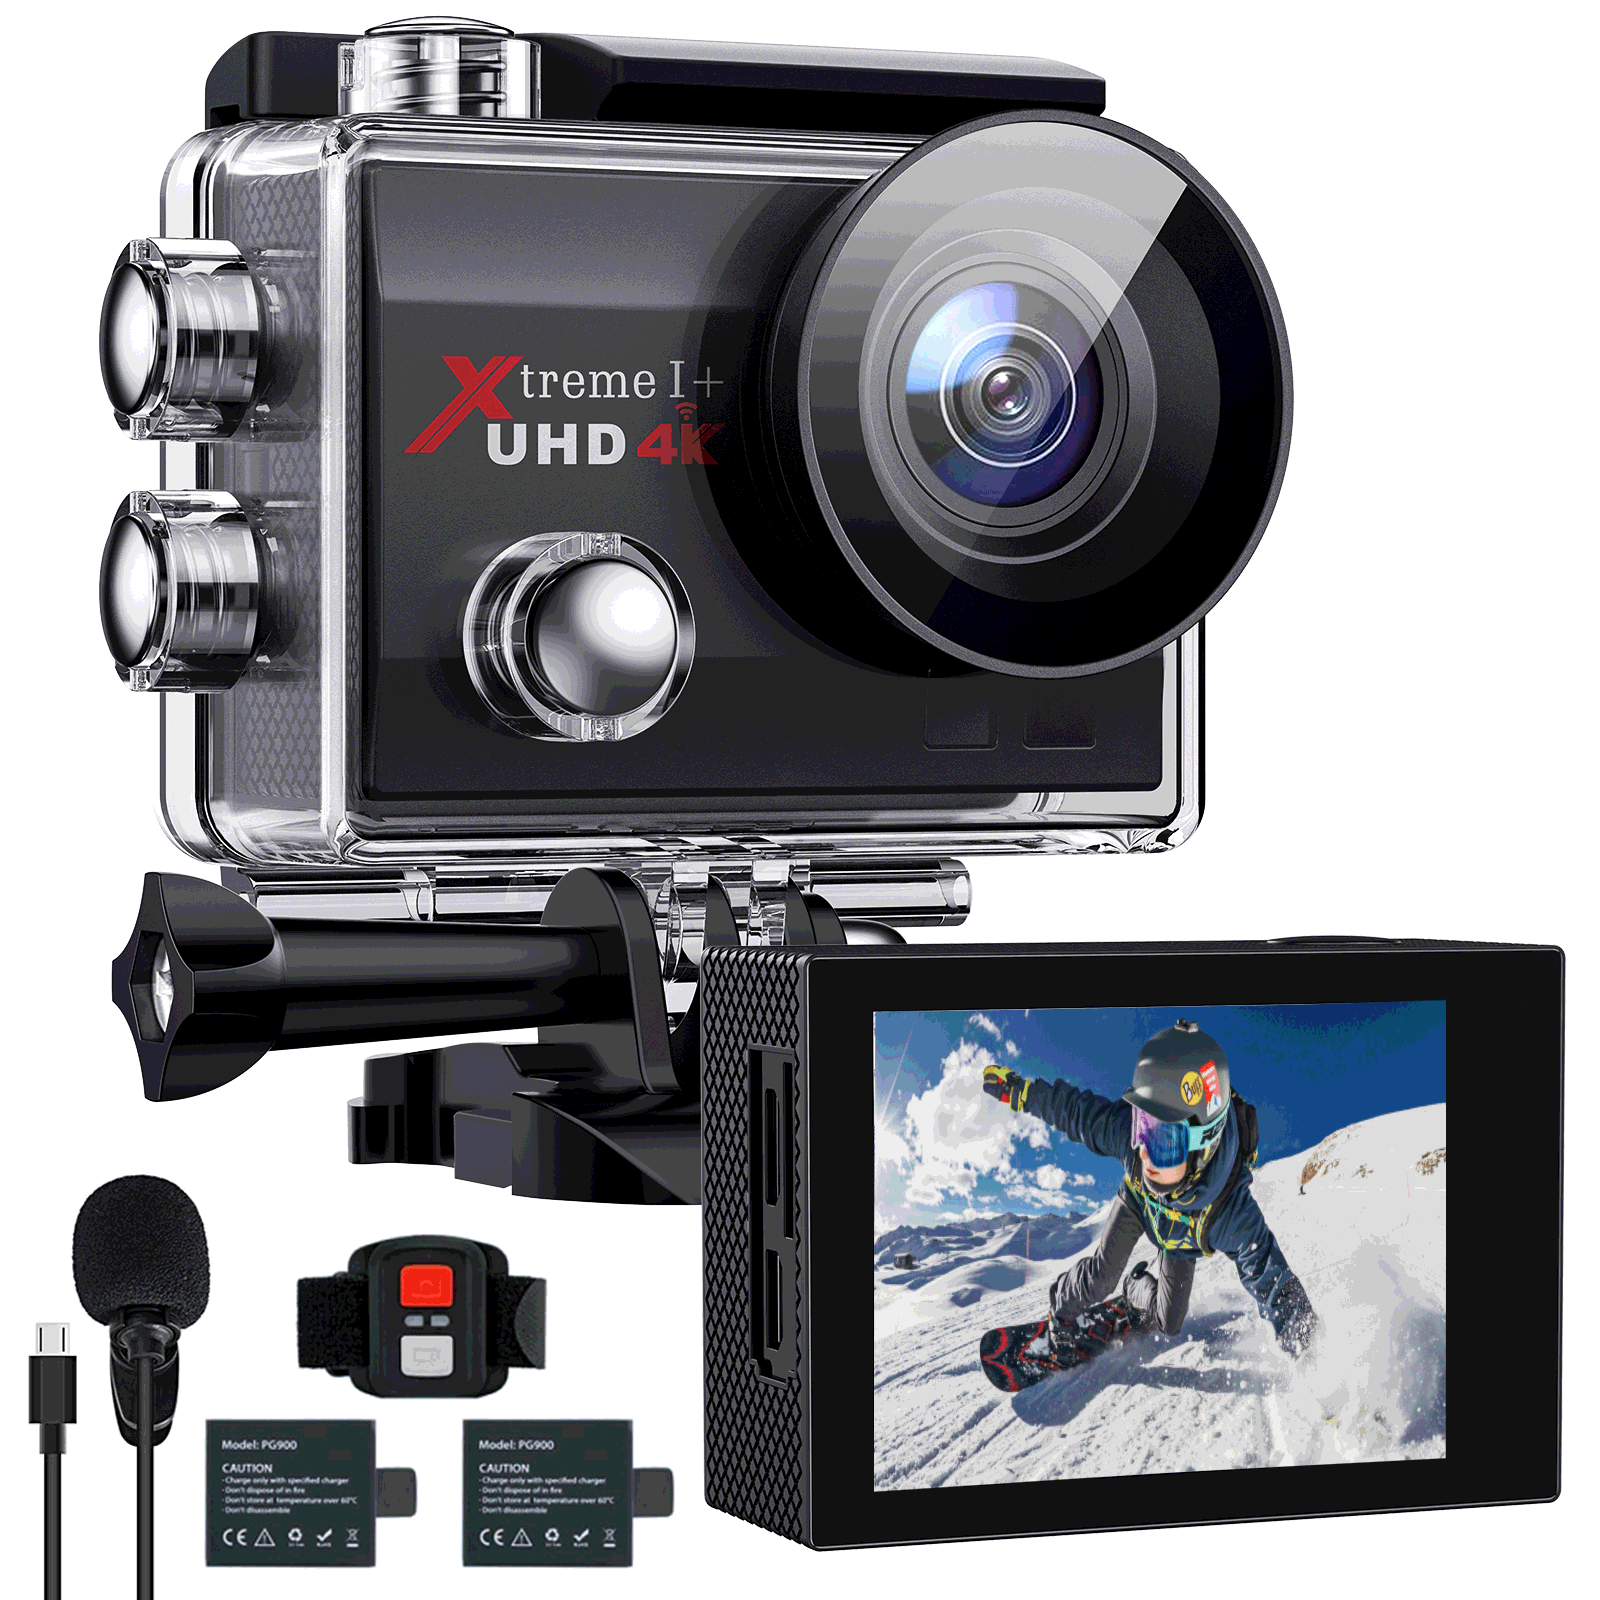 Thieye 4k 30fps 2" azione sport fotocamera camera WIFI FULL HD aktioncam Action Cam 